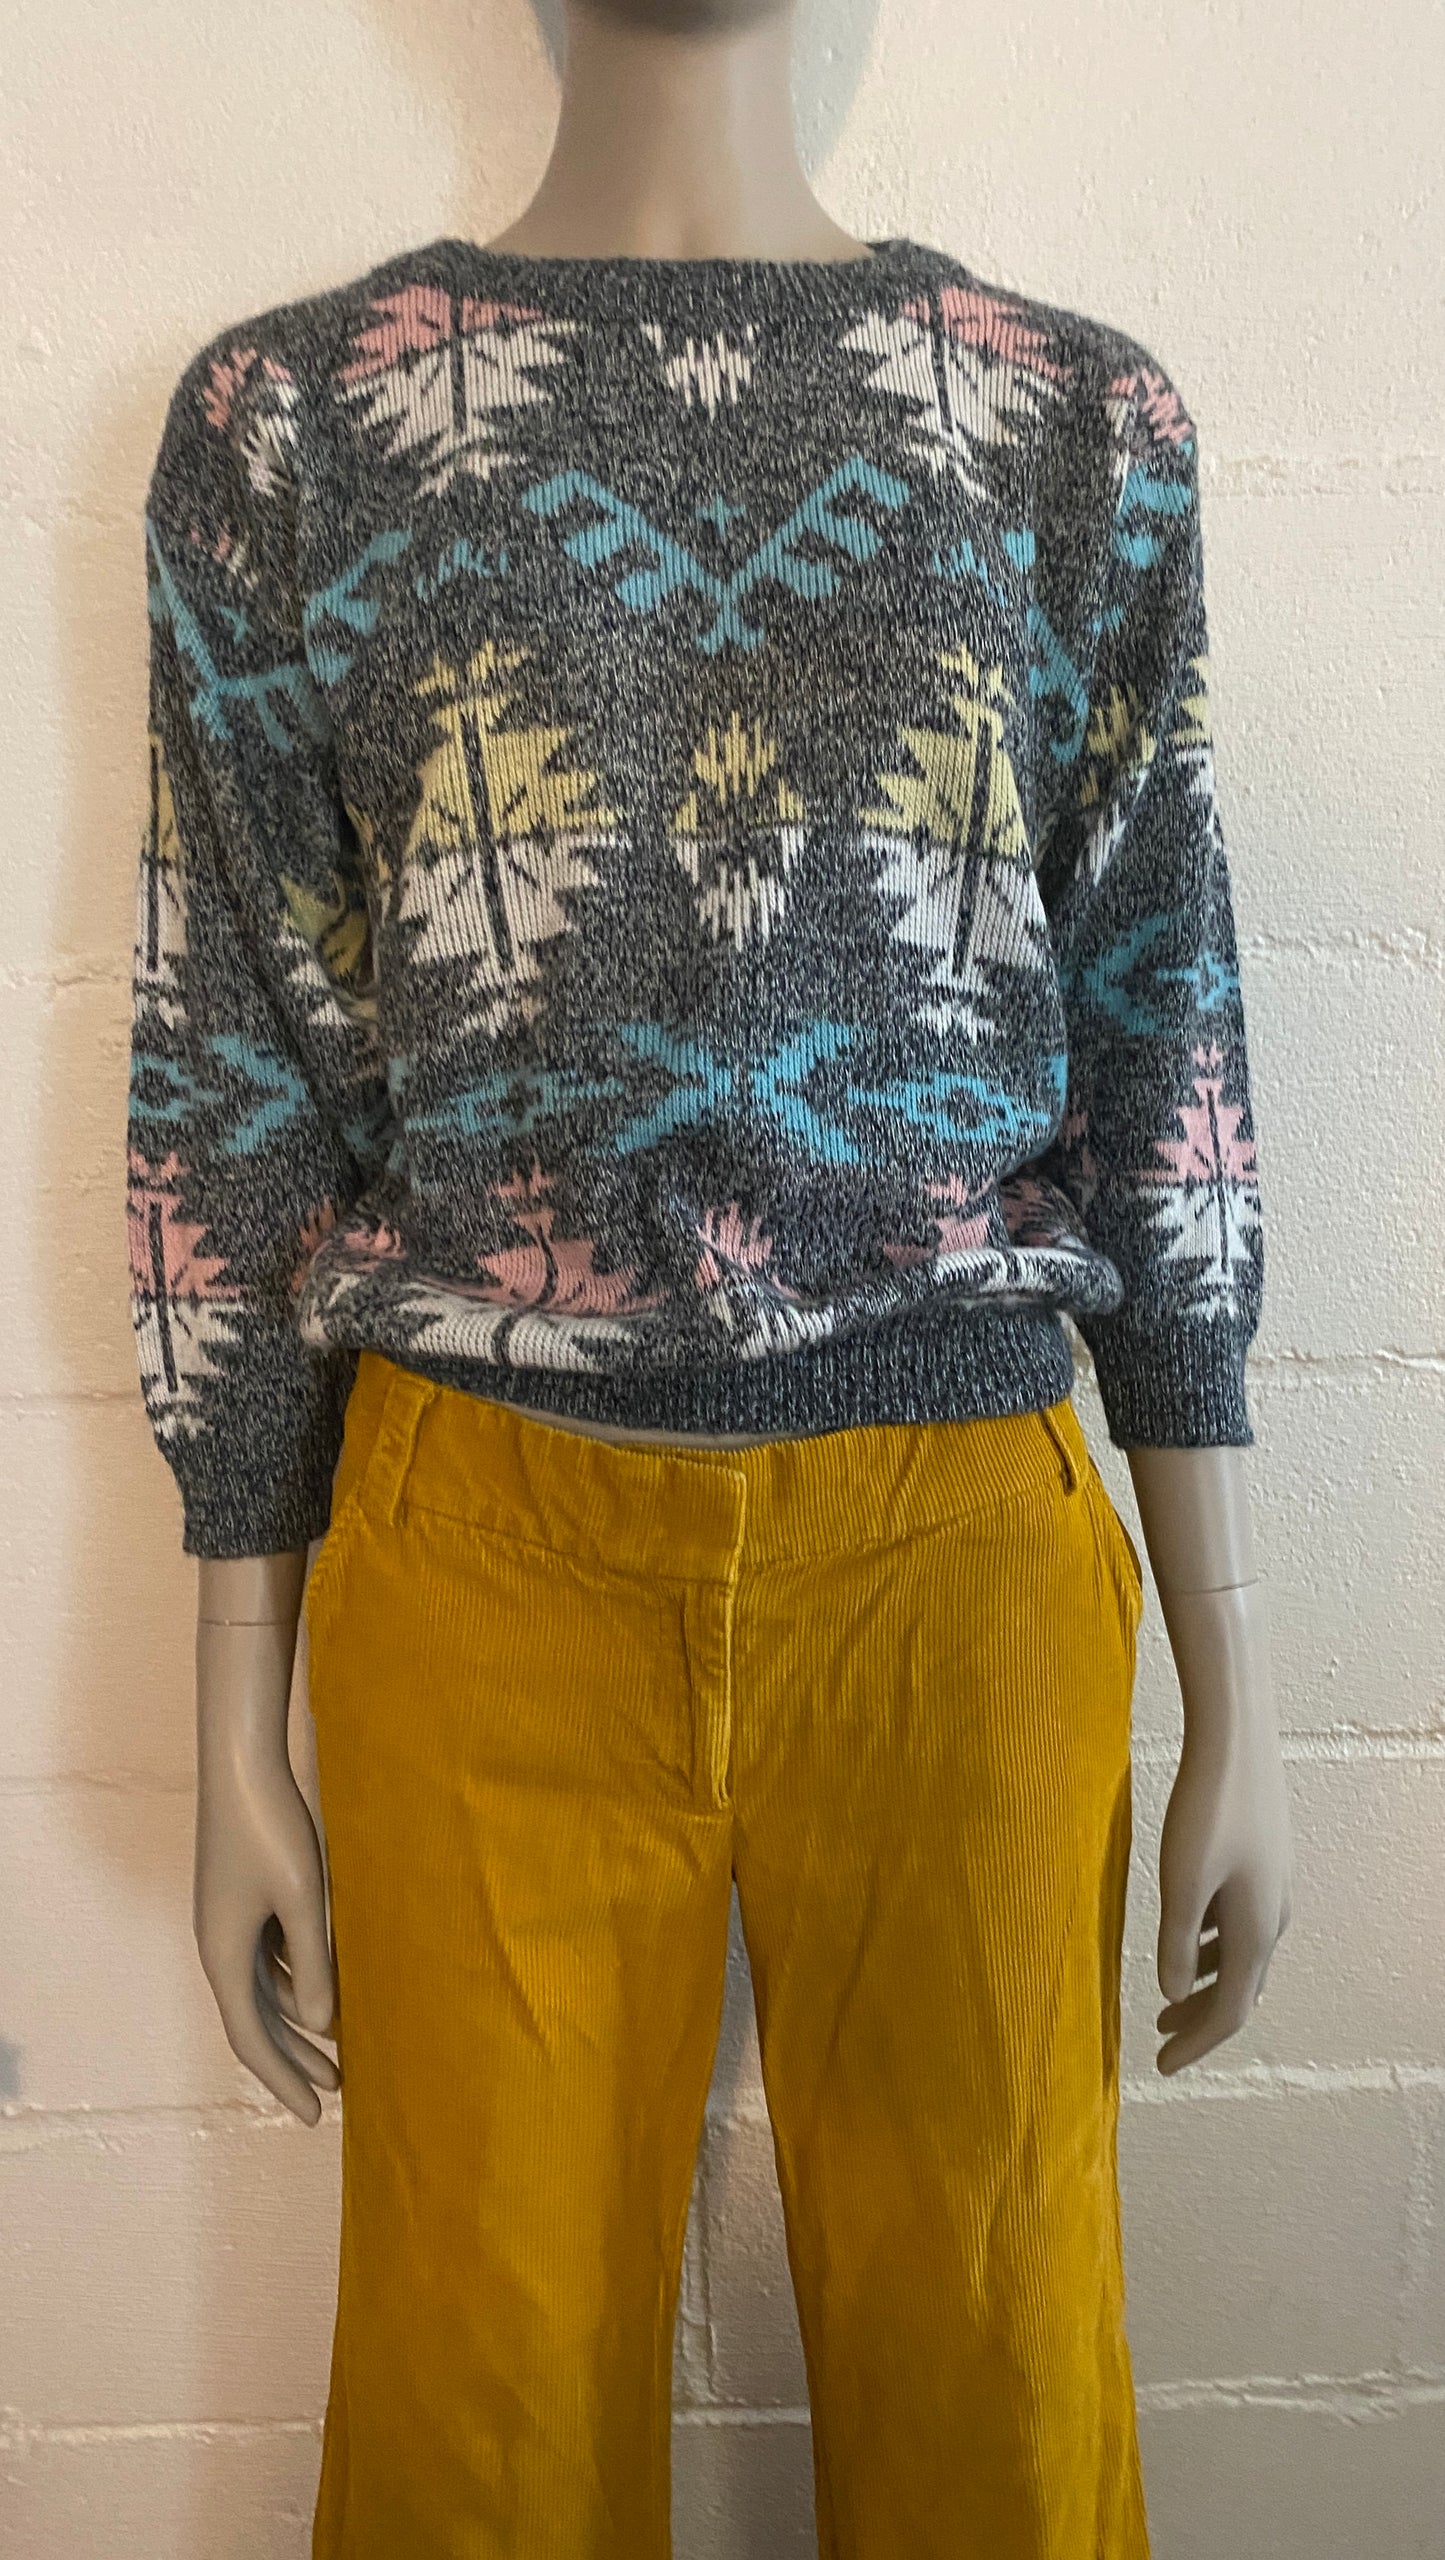 Vintage 80's Justin Allen Geometric Pastel Sweater Sz S/M Acrylic Pullover Knit